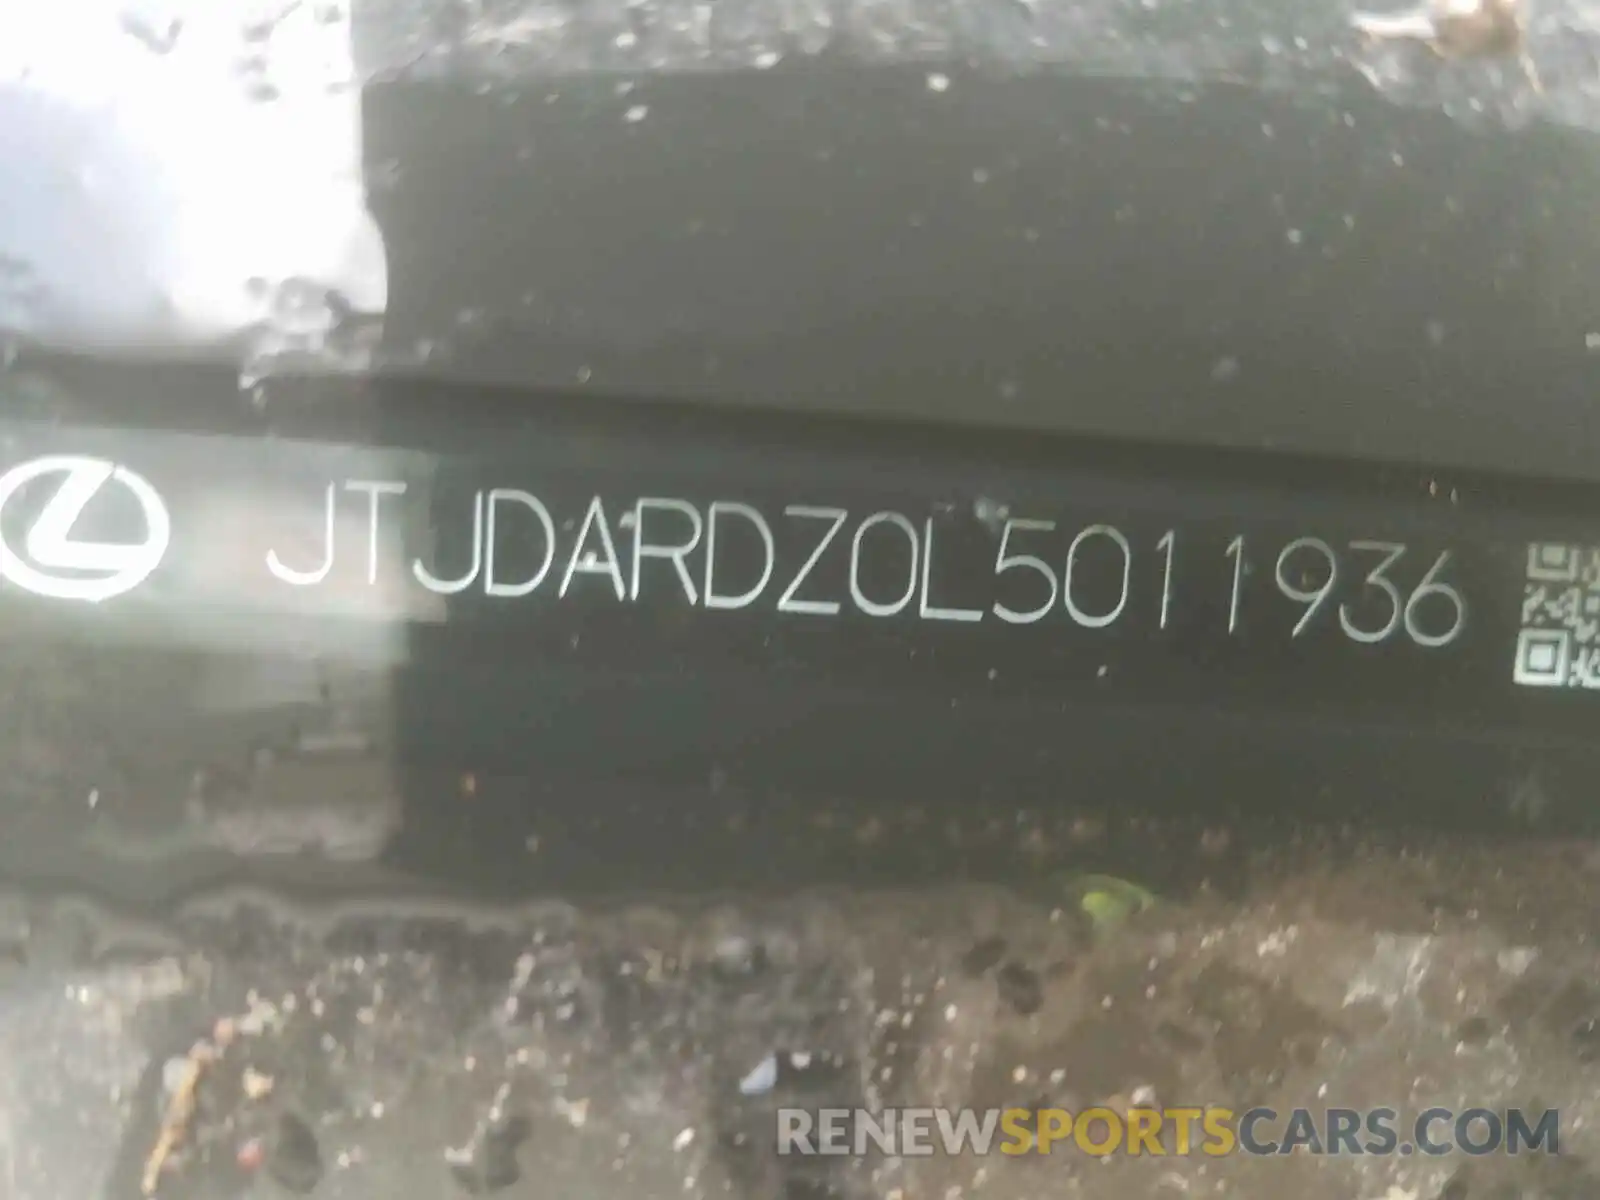 10 Photograph of a damaged car JTJDARDZ0L5011936 LEXUS NX 2020